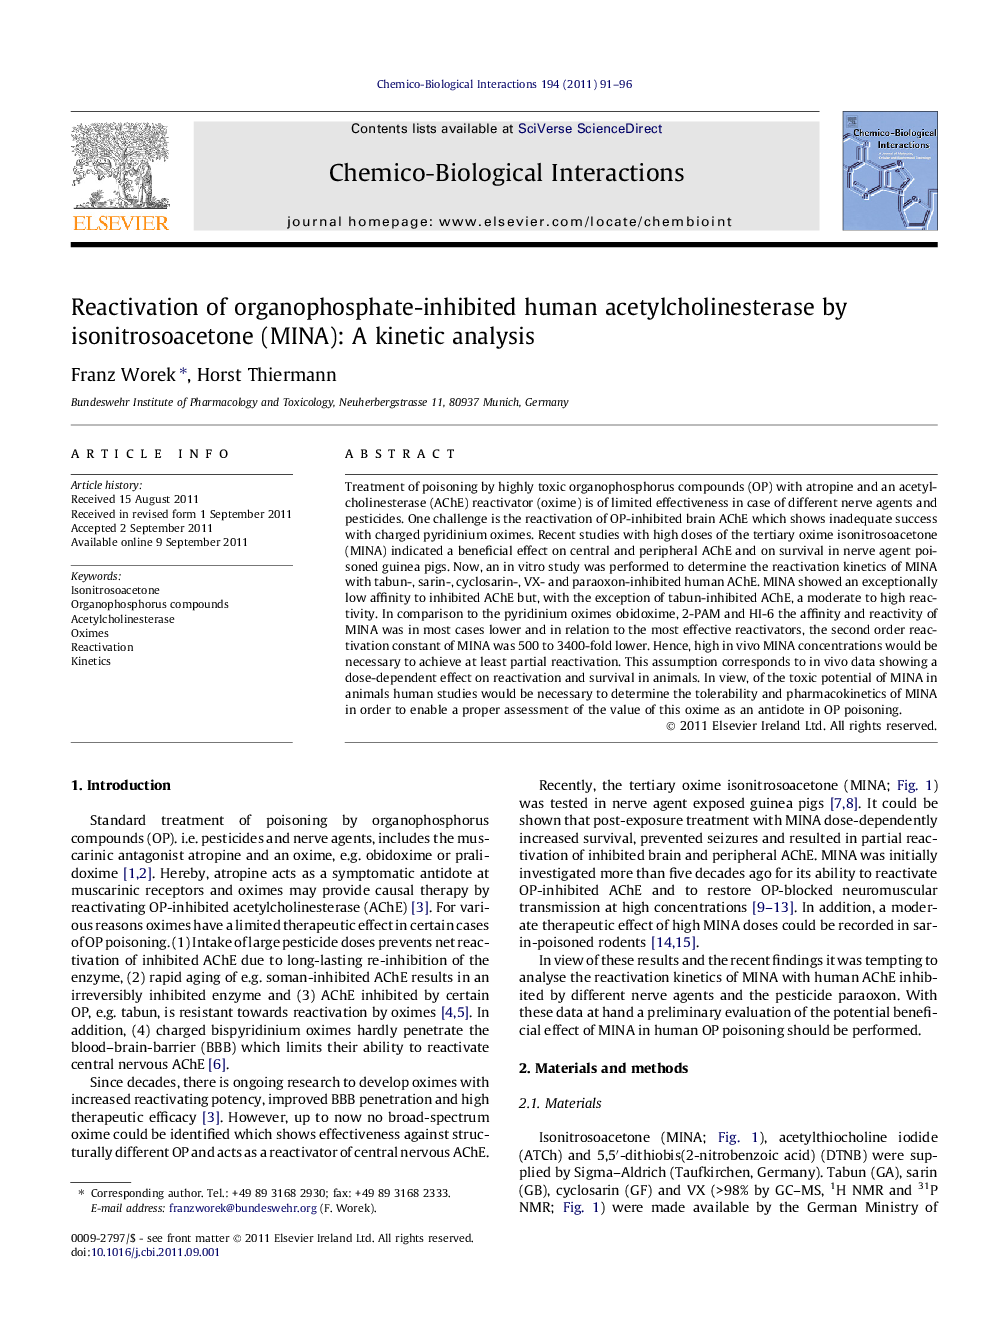 Reactivation of organophosphate-inhibited human acetylcholinesterase by isonitrosoacetone (MINA): A kinetic analysis